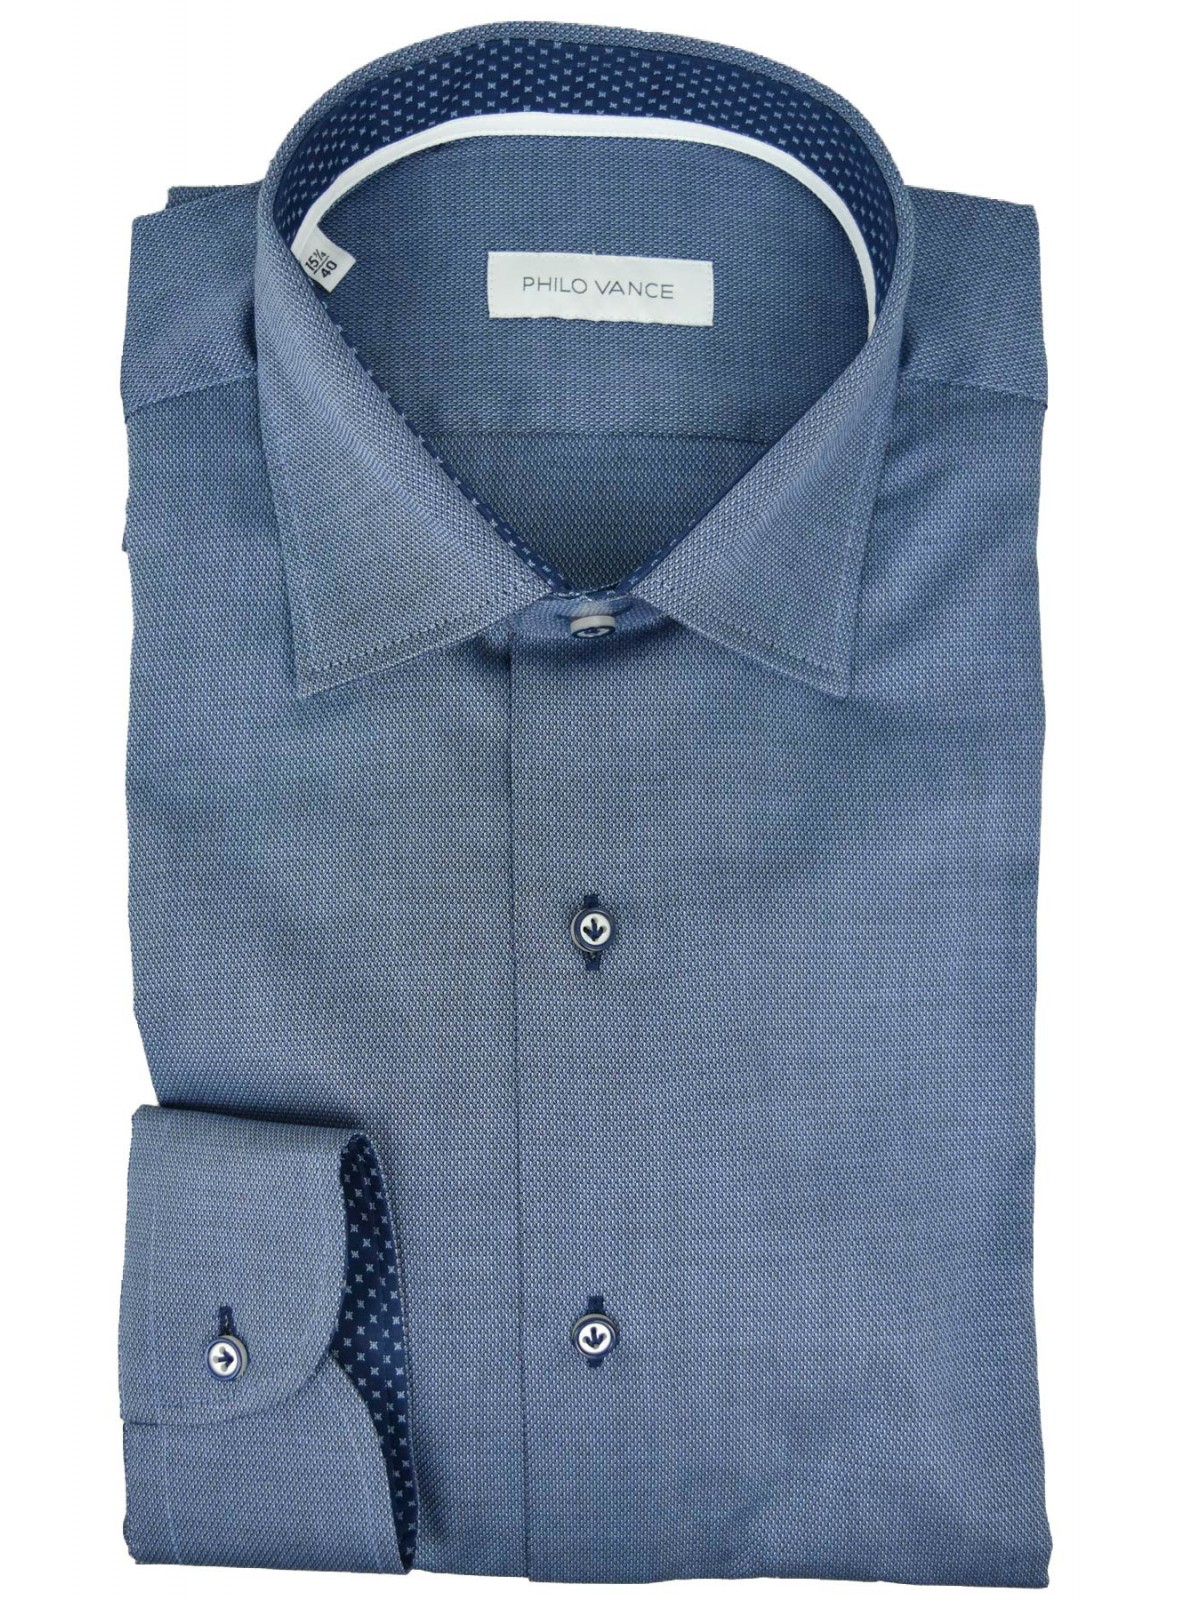 Elegant Medium Blue Men's Shirt with Style Details - Philo Vance - Diamante